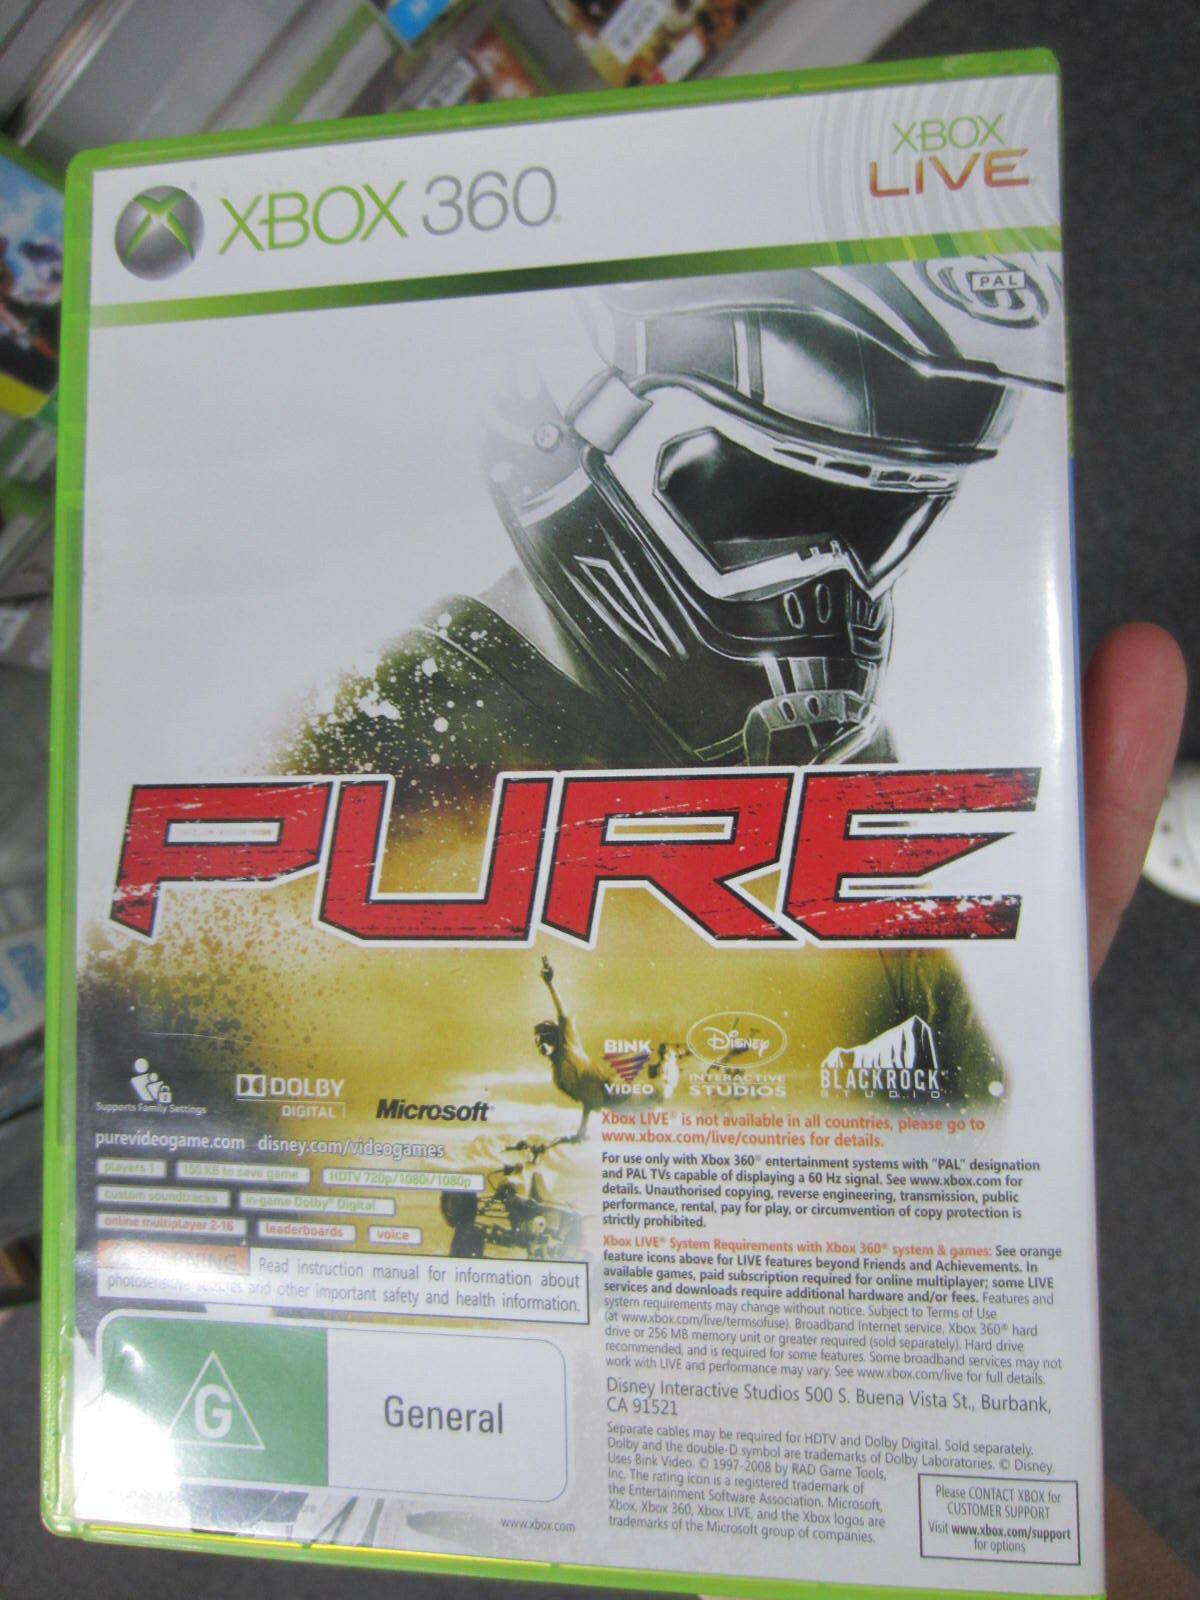 Game | Microsoft Xbox 360 | Lego Batman & Pure Bundle